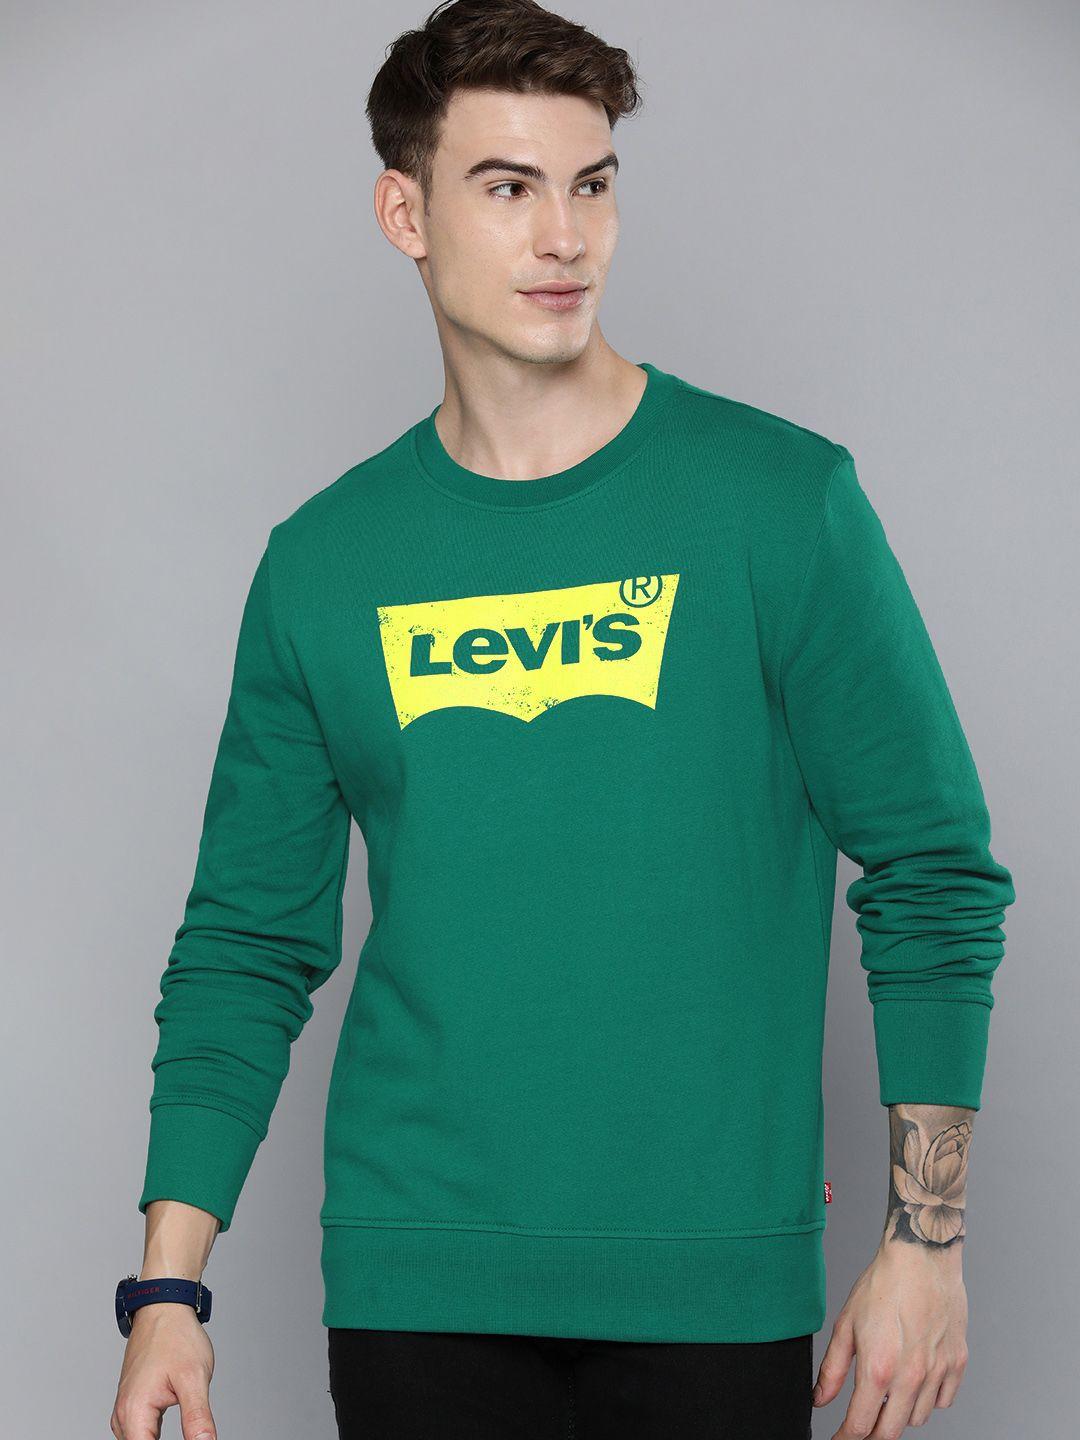 levis-men-green-brand-logo-printed-pure-cotton-sweatshirt